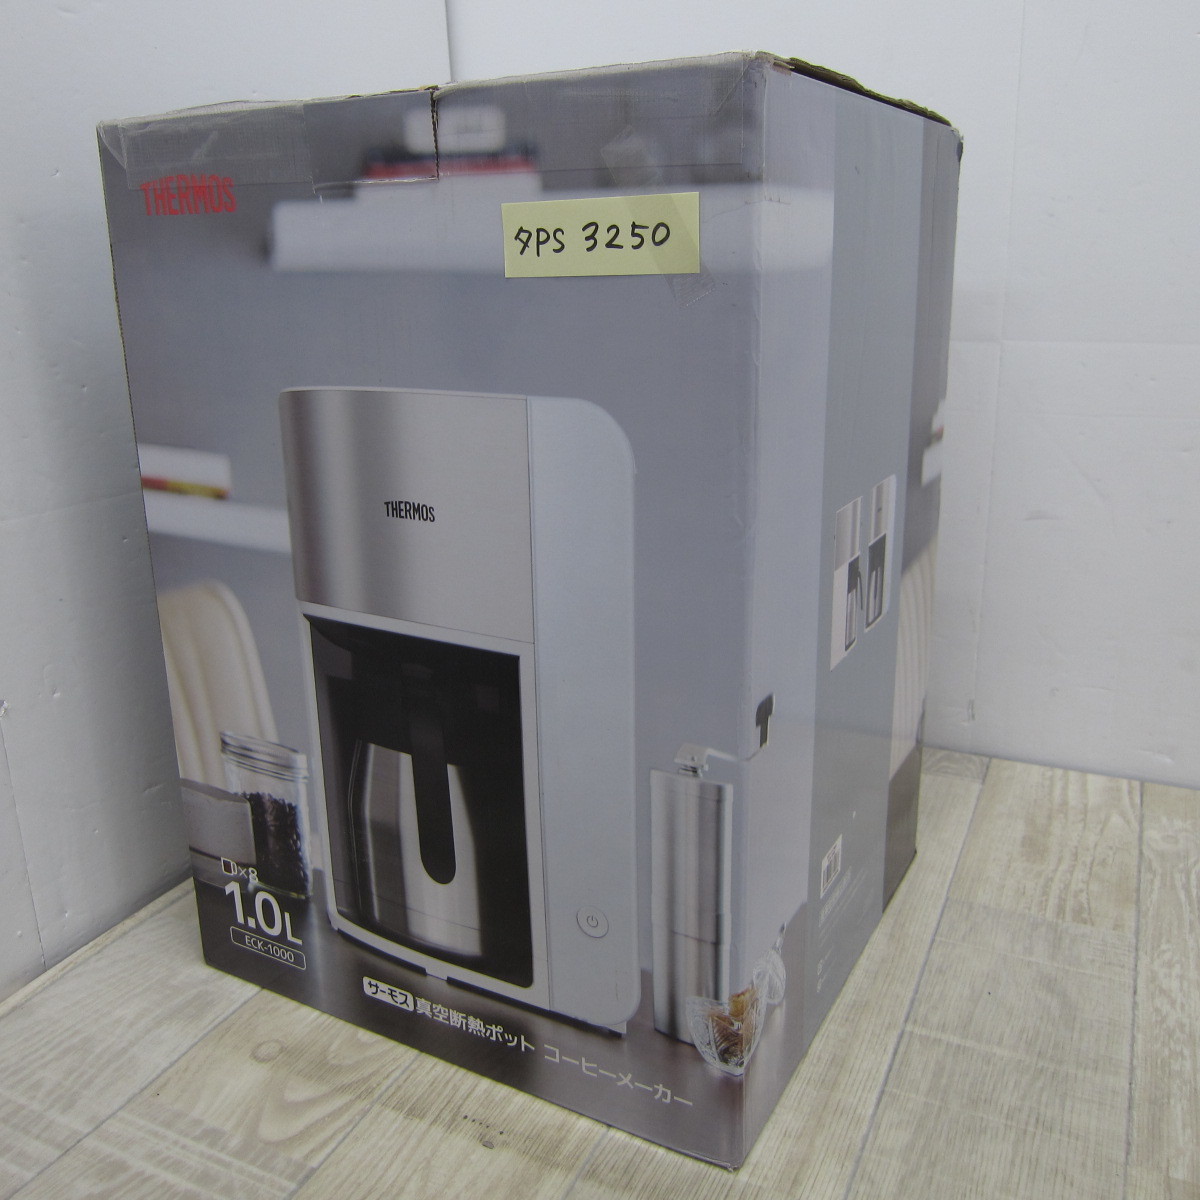 PS3250【未使用】サーモス 真空断熱ポットコーヒーメーカー 1L ホワイト ECK-1000 WH